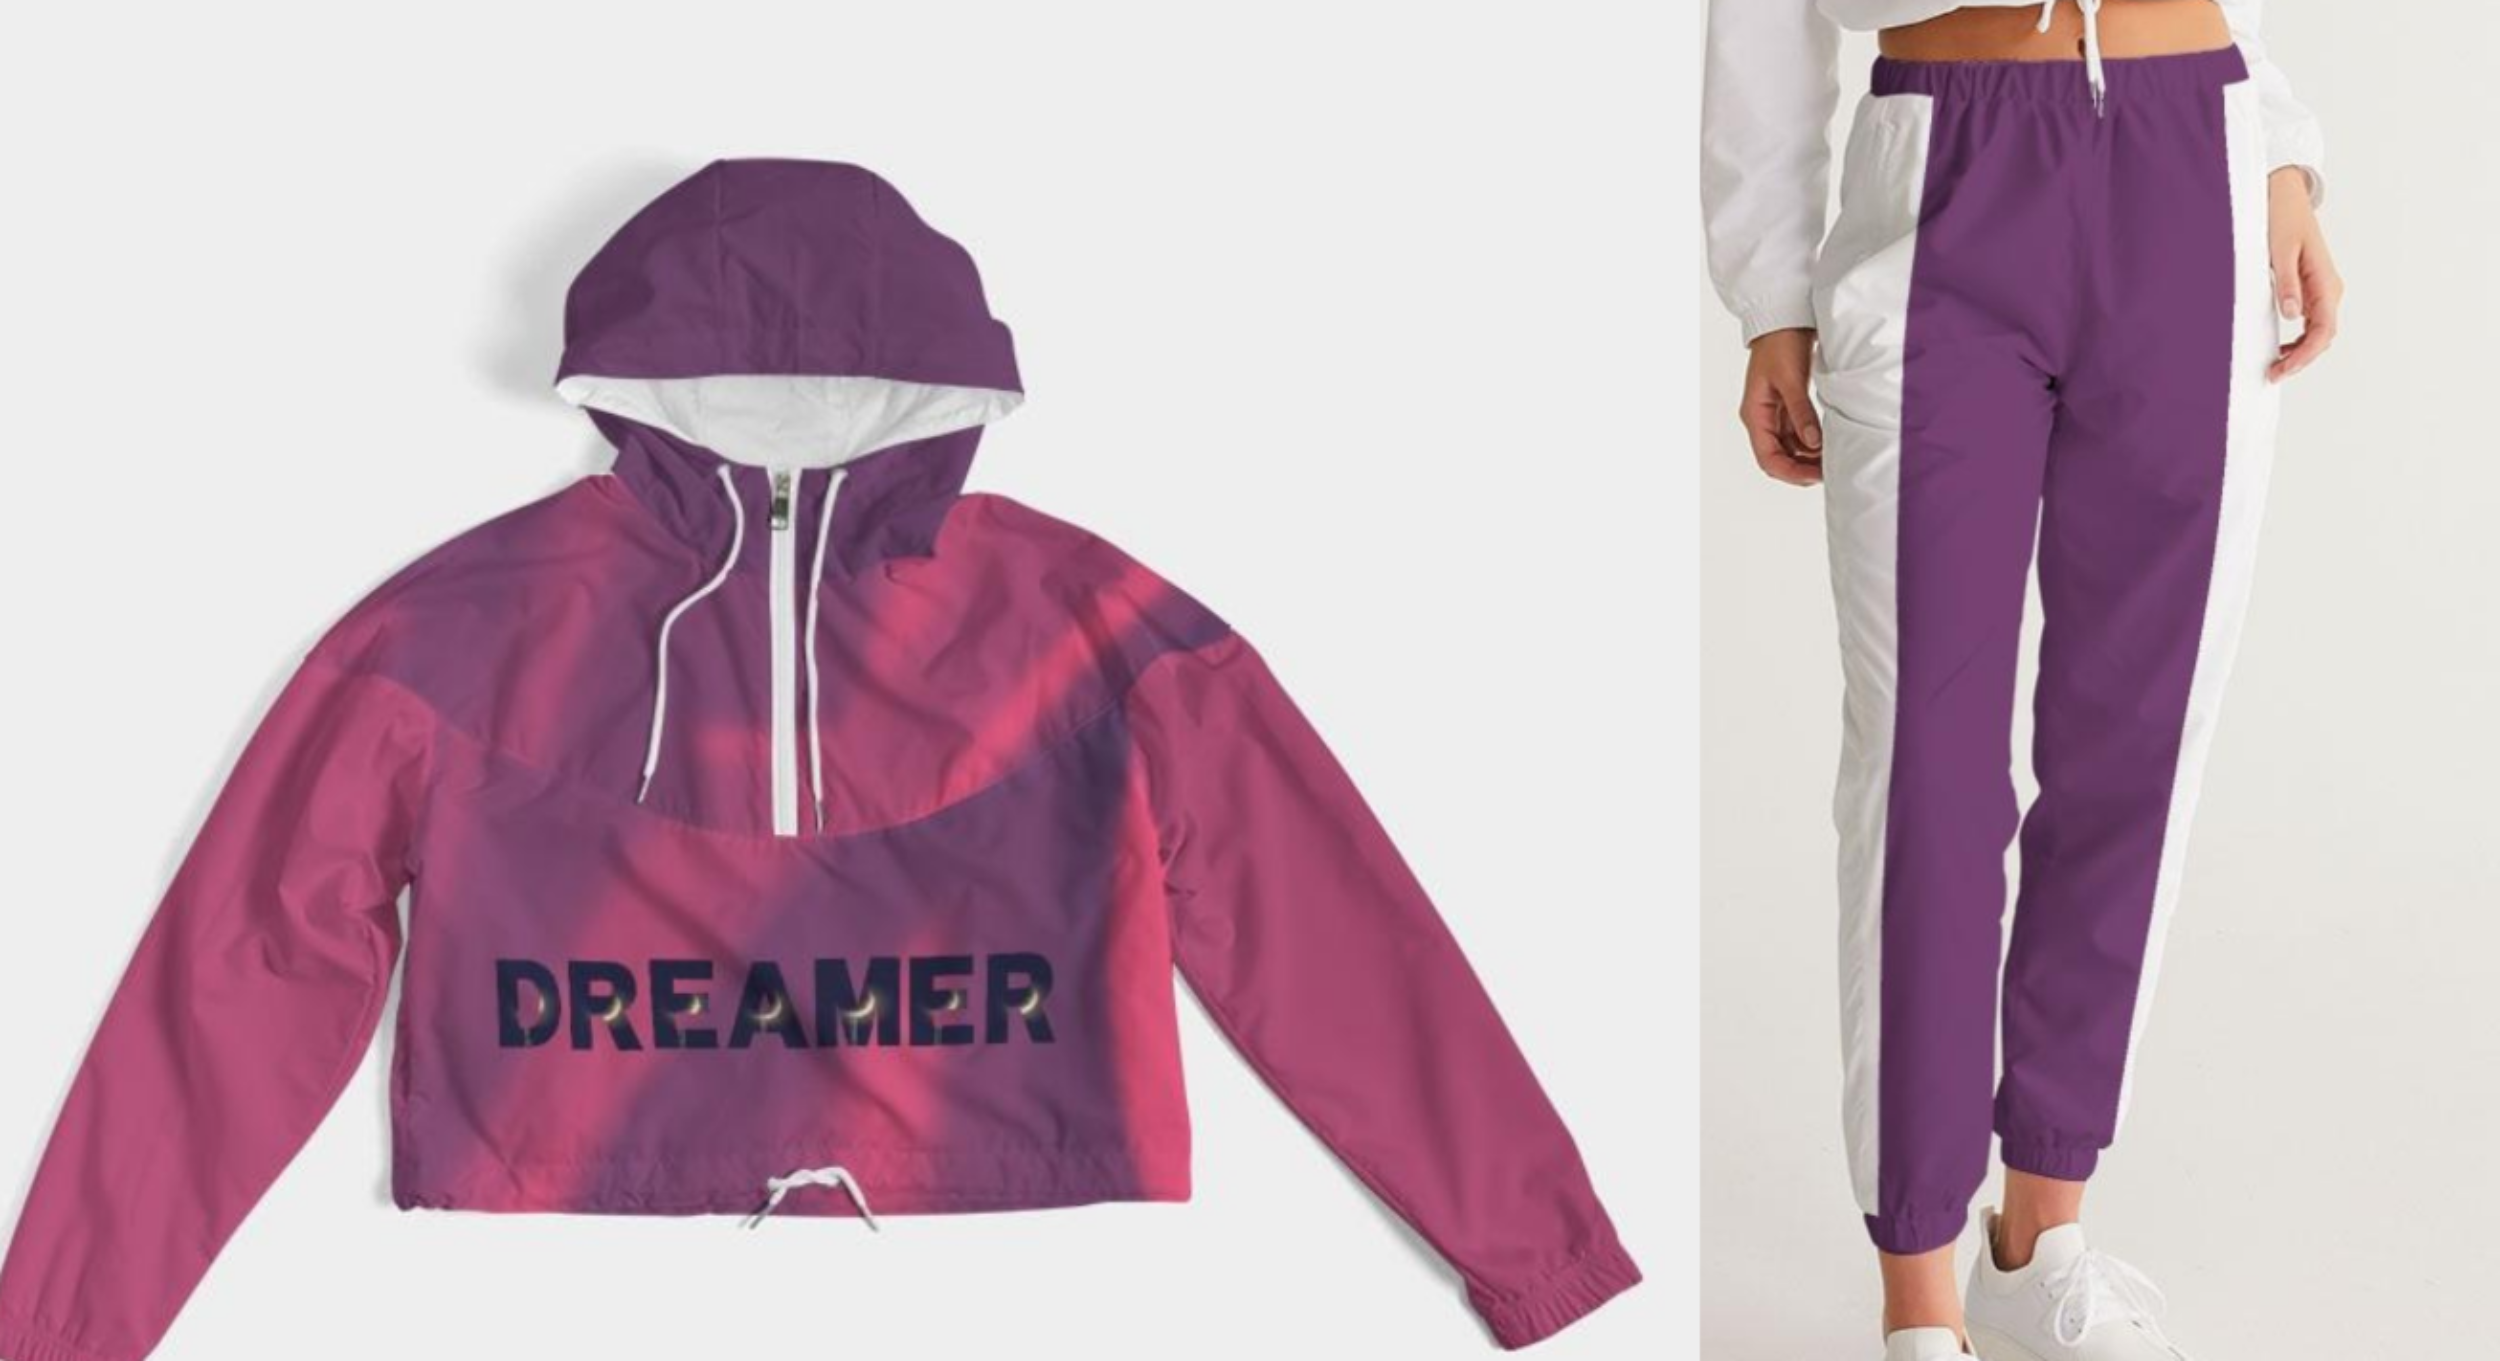 Dreamer Women's Track Suit